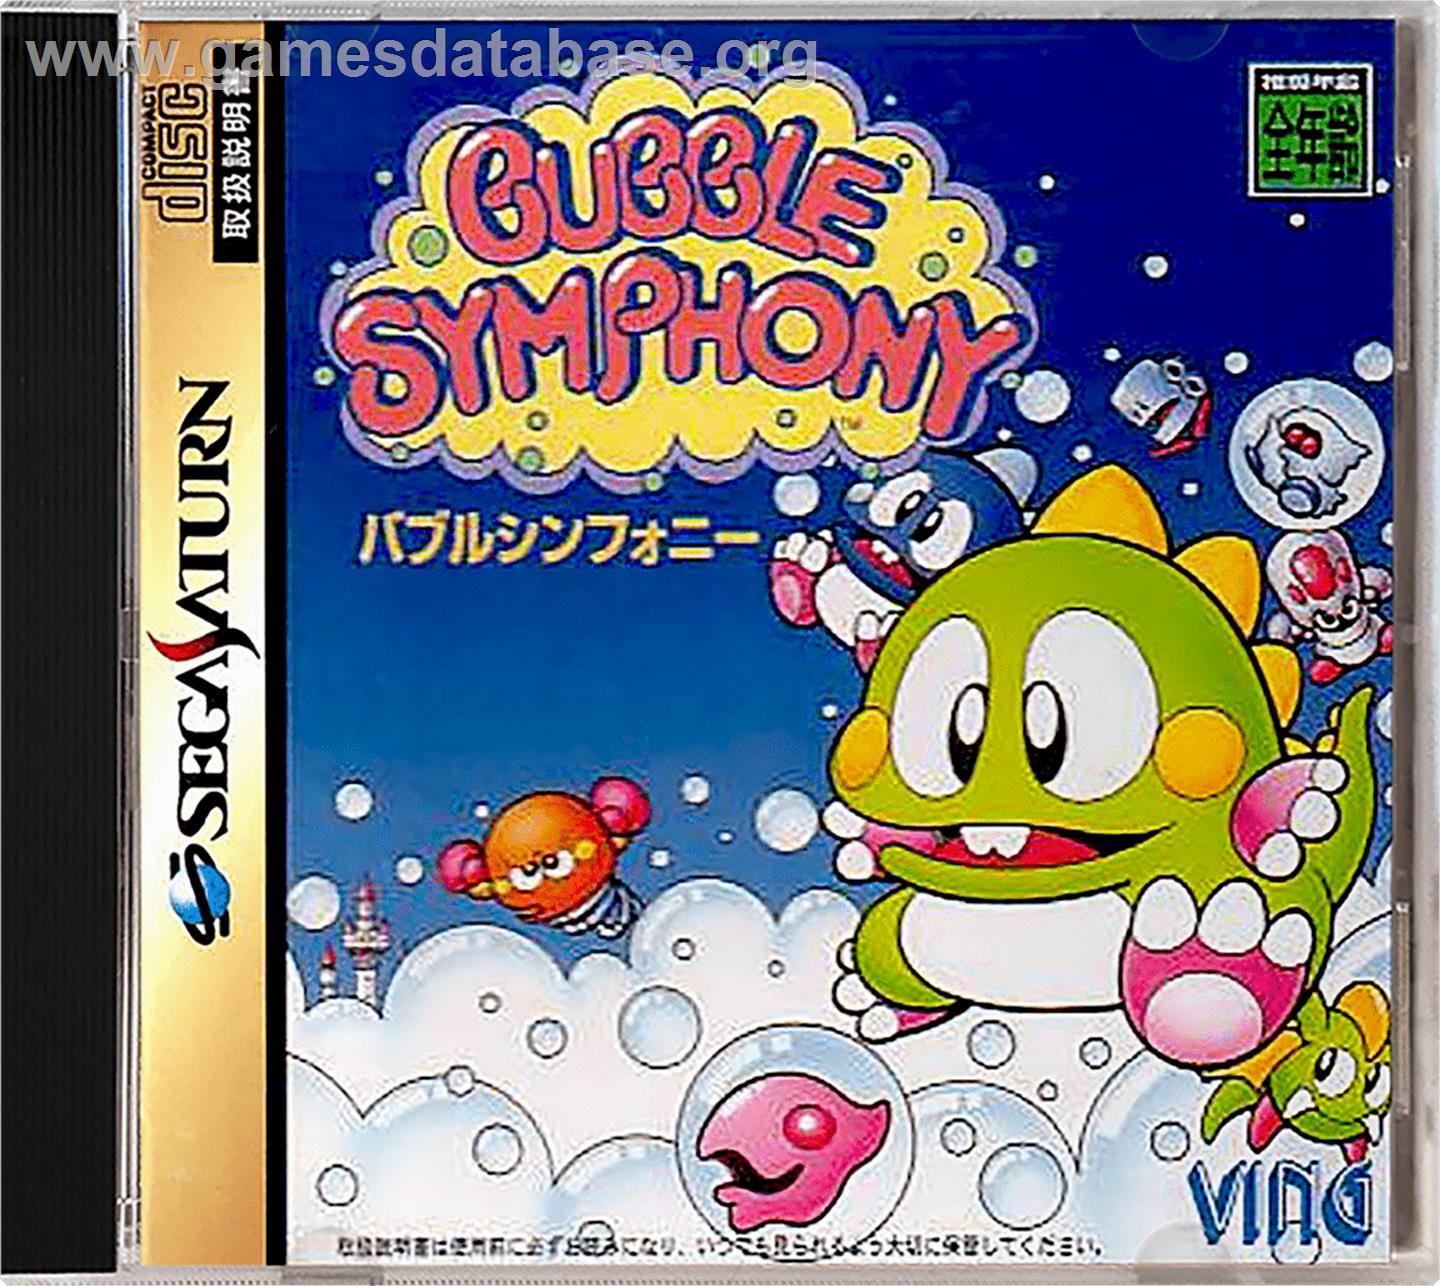 Bubble Symphony - Sega Saturn - Artwork - Box